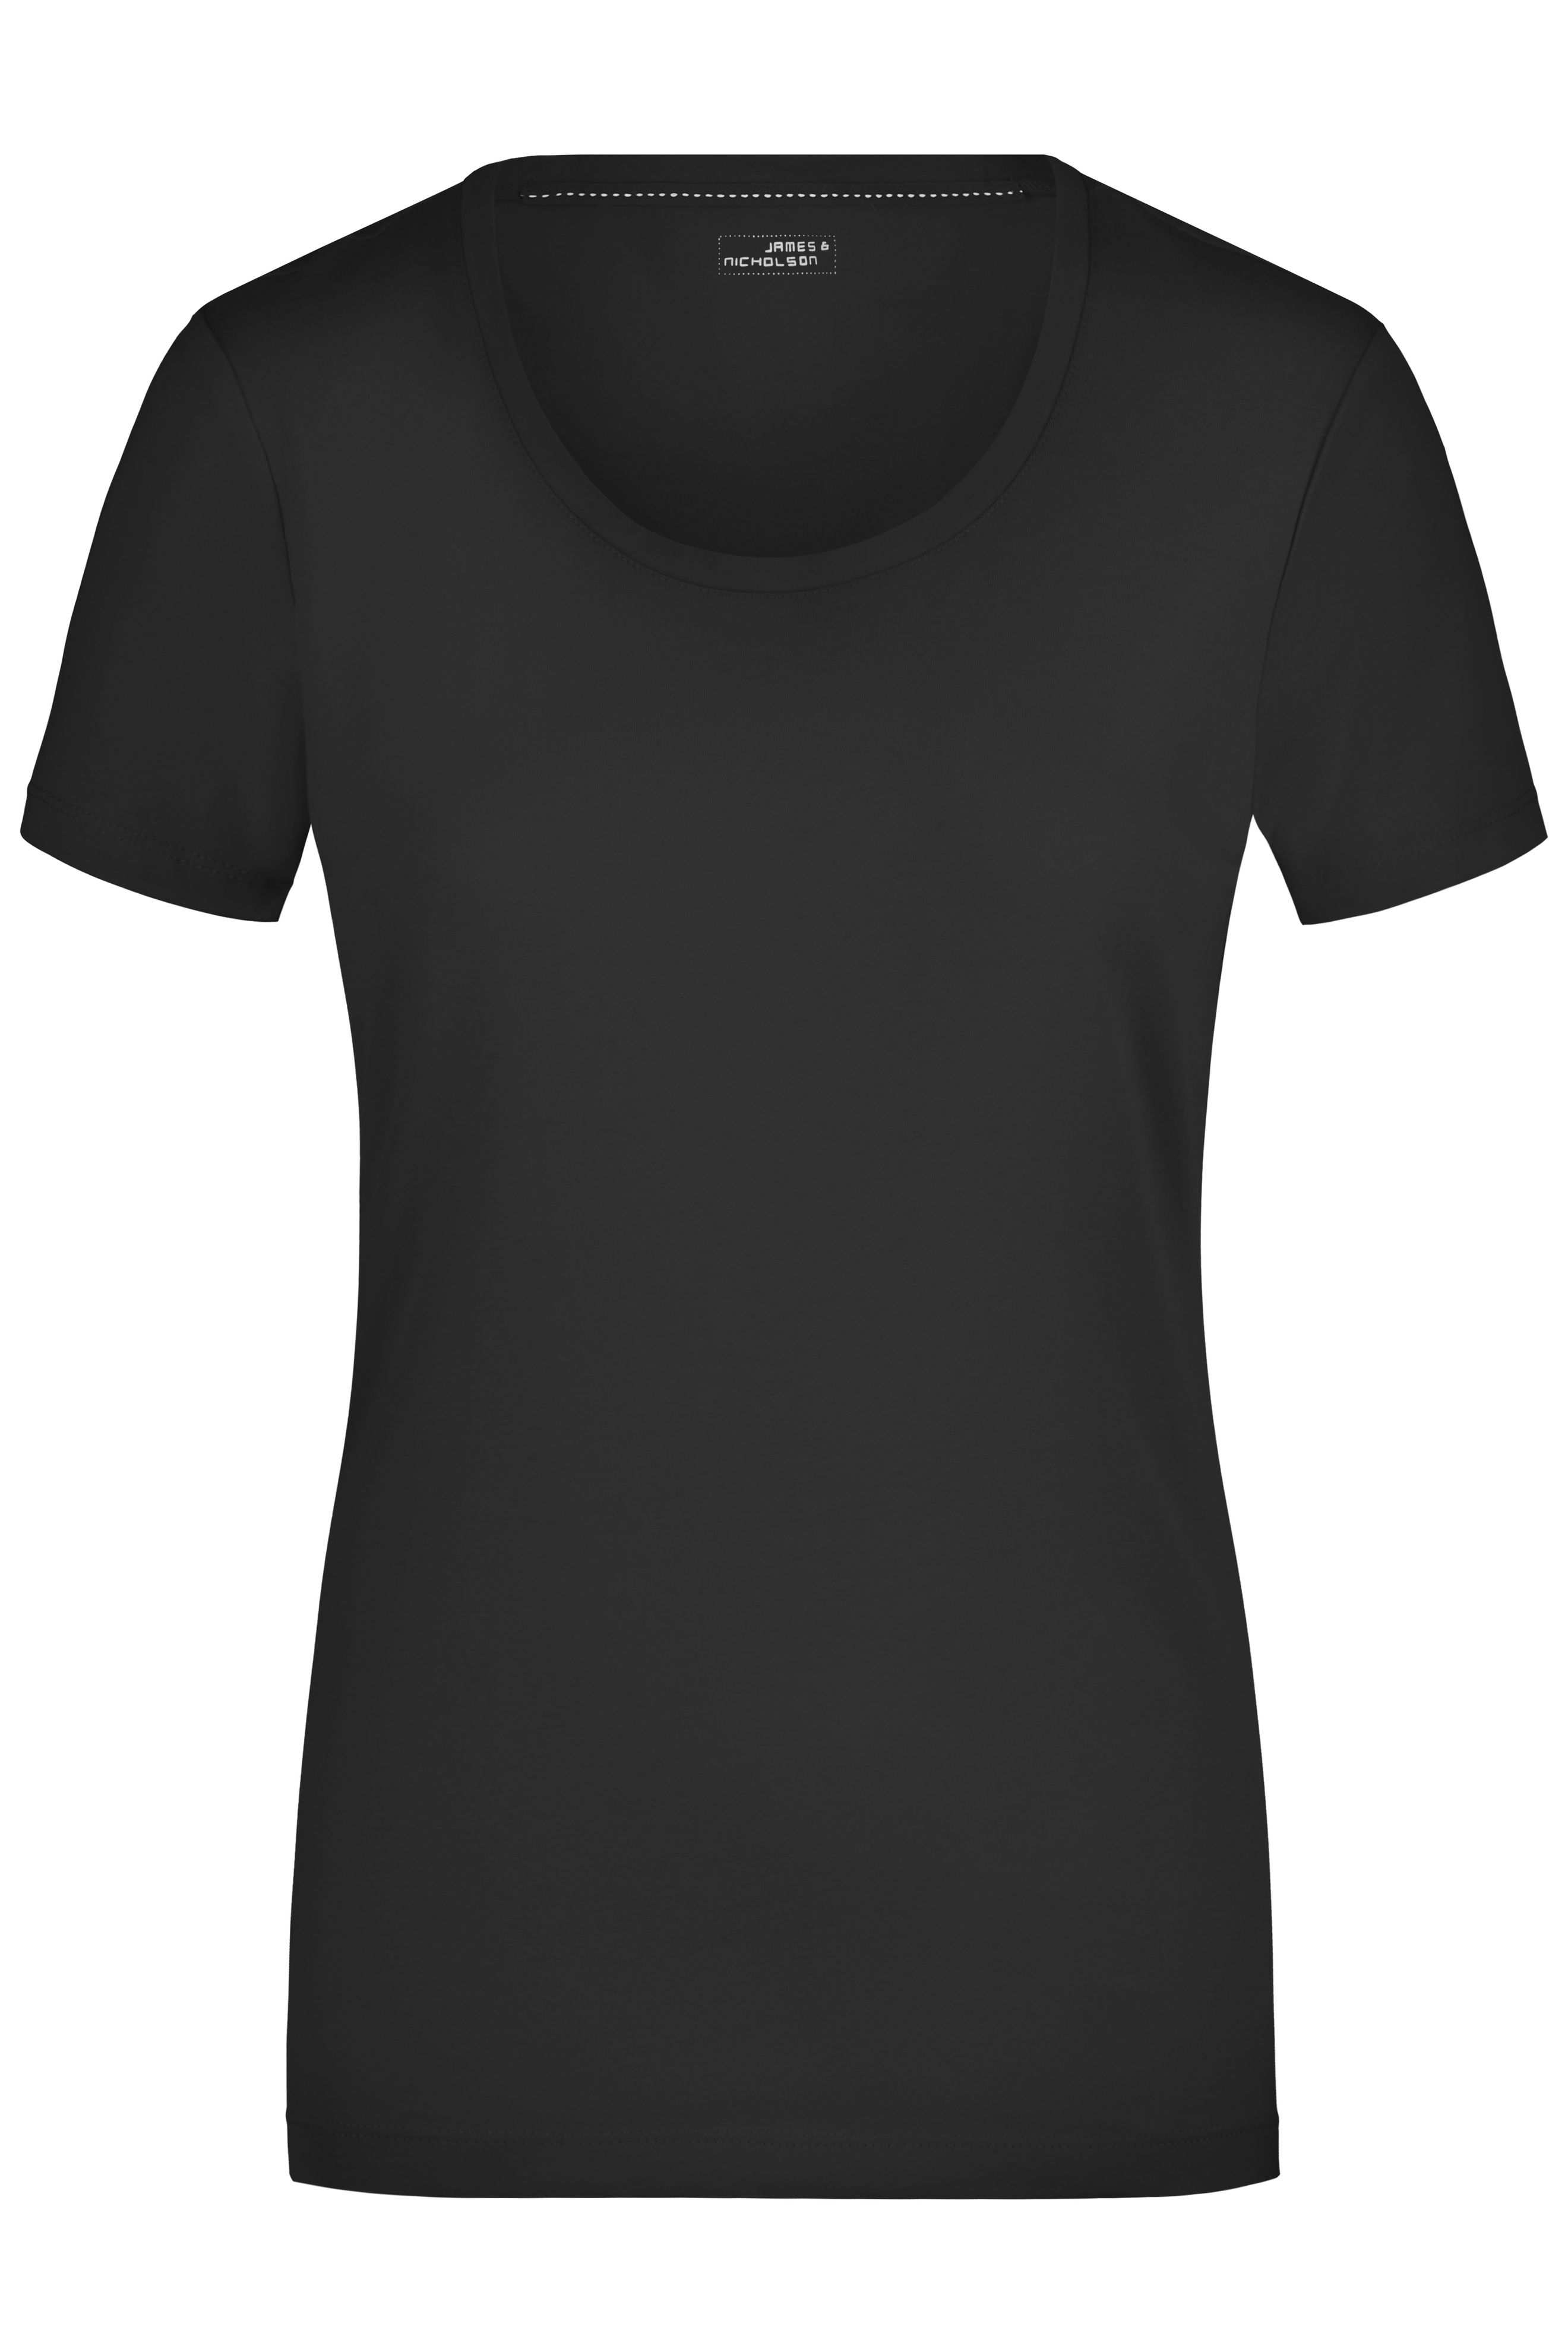 James & Nicholson Damen T-Shirt LADIES` RAGLAN-T Rundhals S M L XL XXL Neu JN011 